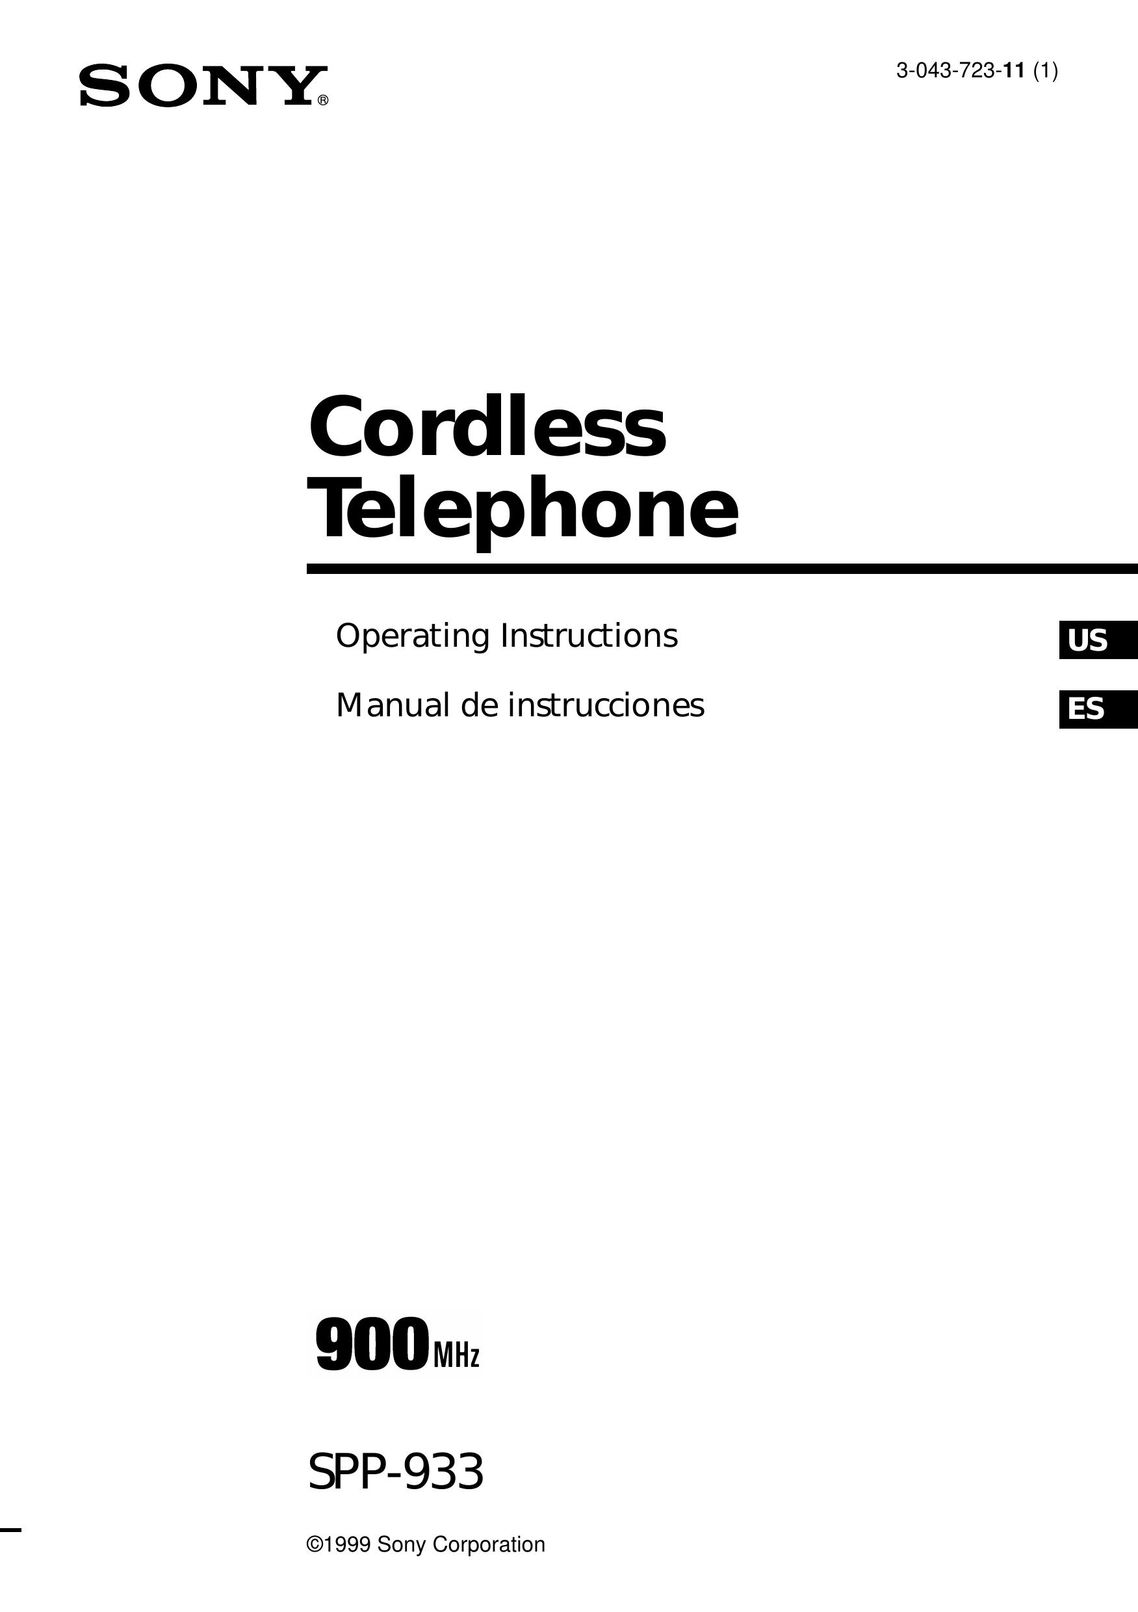 Sony SPP-933 Cordless Telephone User Manual